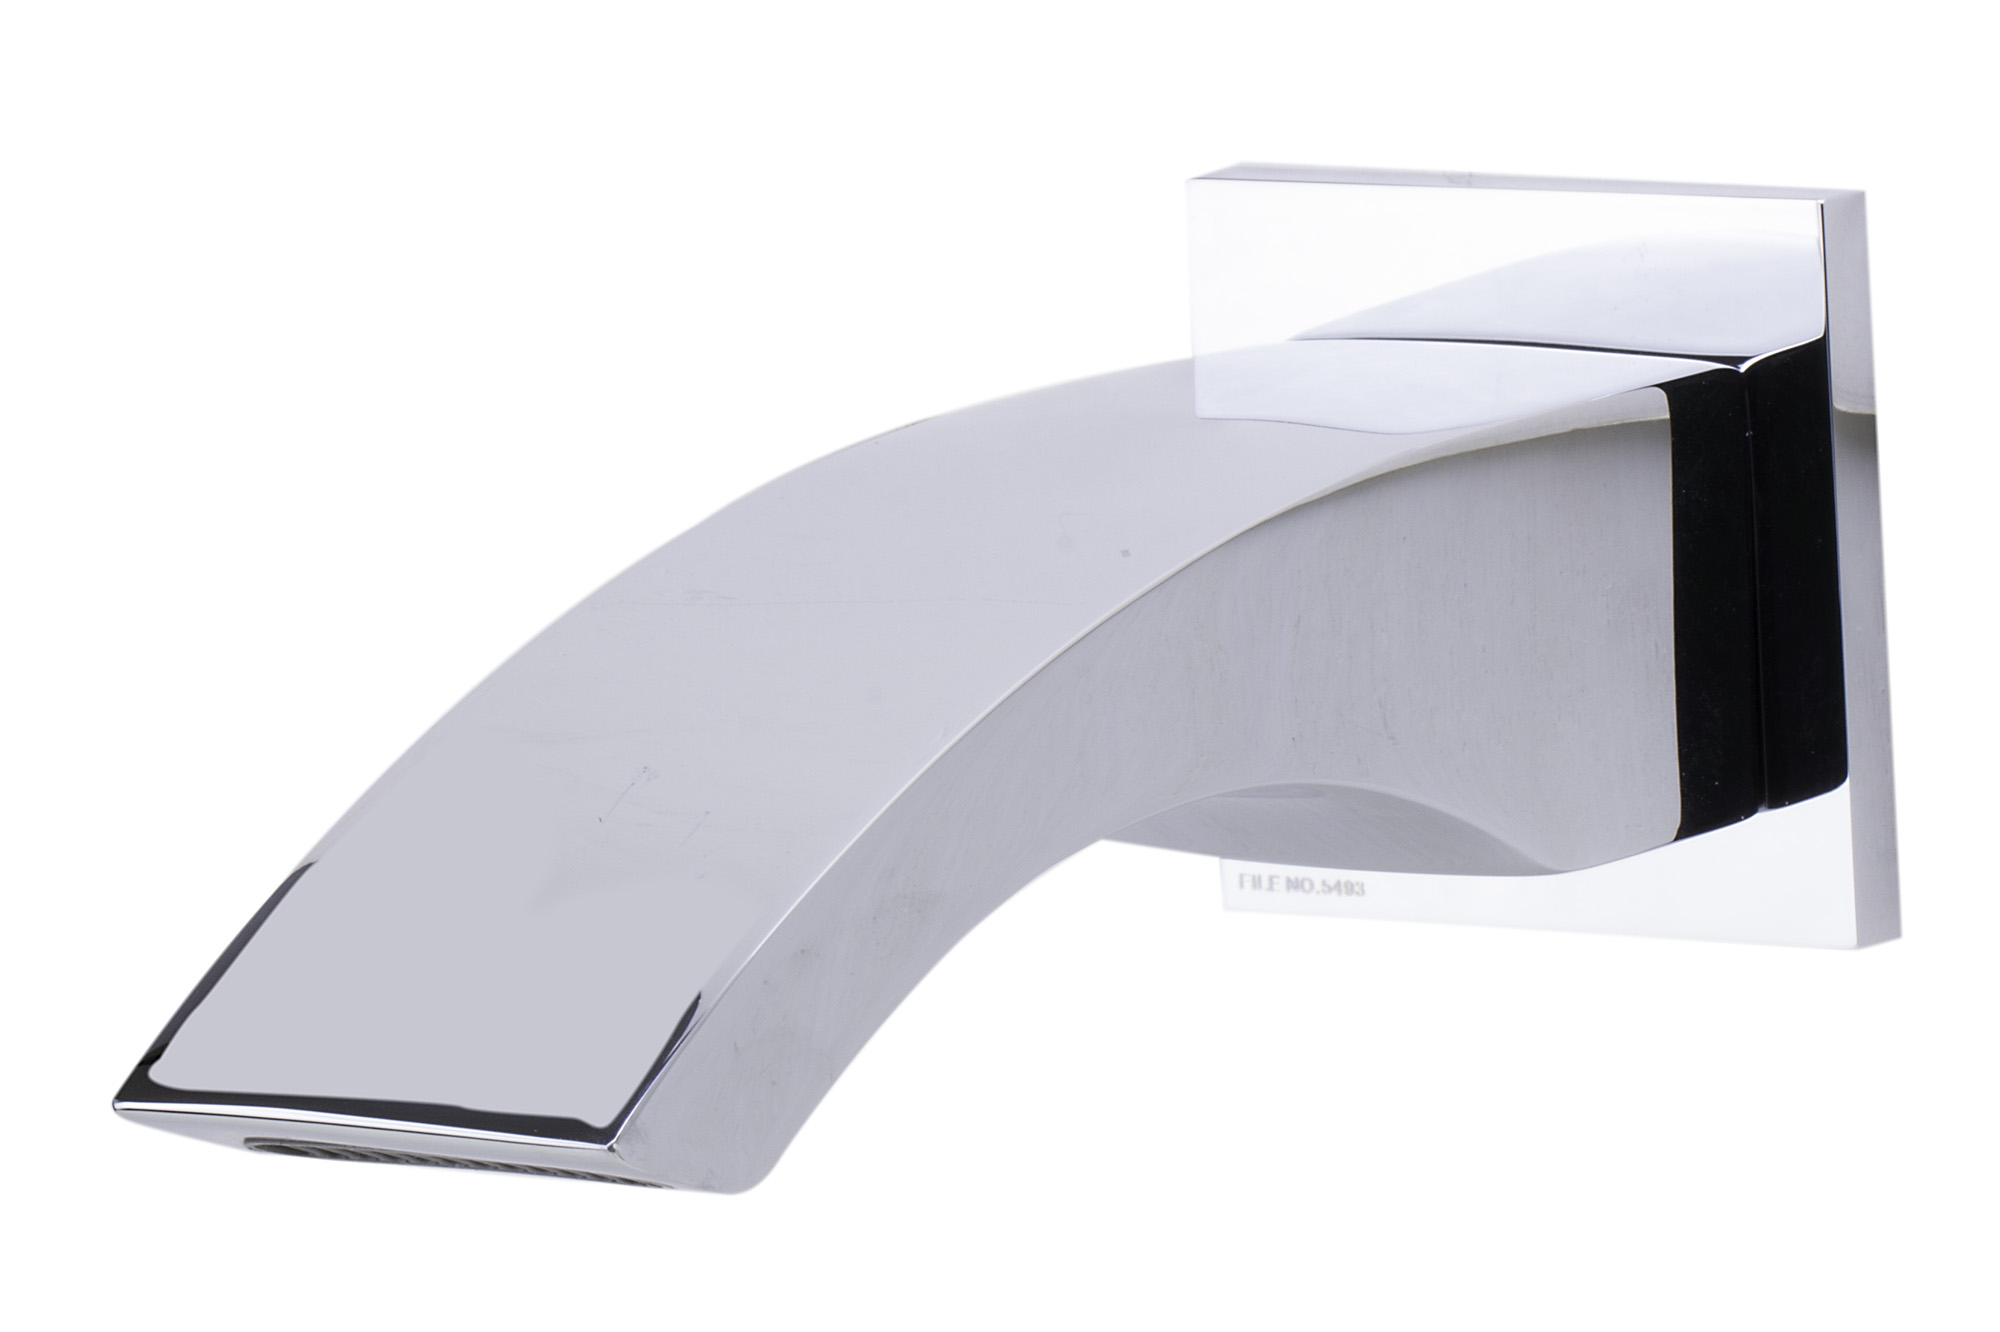 ALFI brand Brass, AB3301-PC Polished Chrome Curved Wallmounted Tub Filler Bathroom Spout